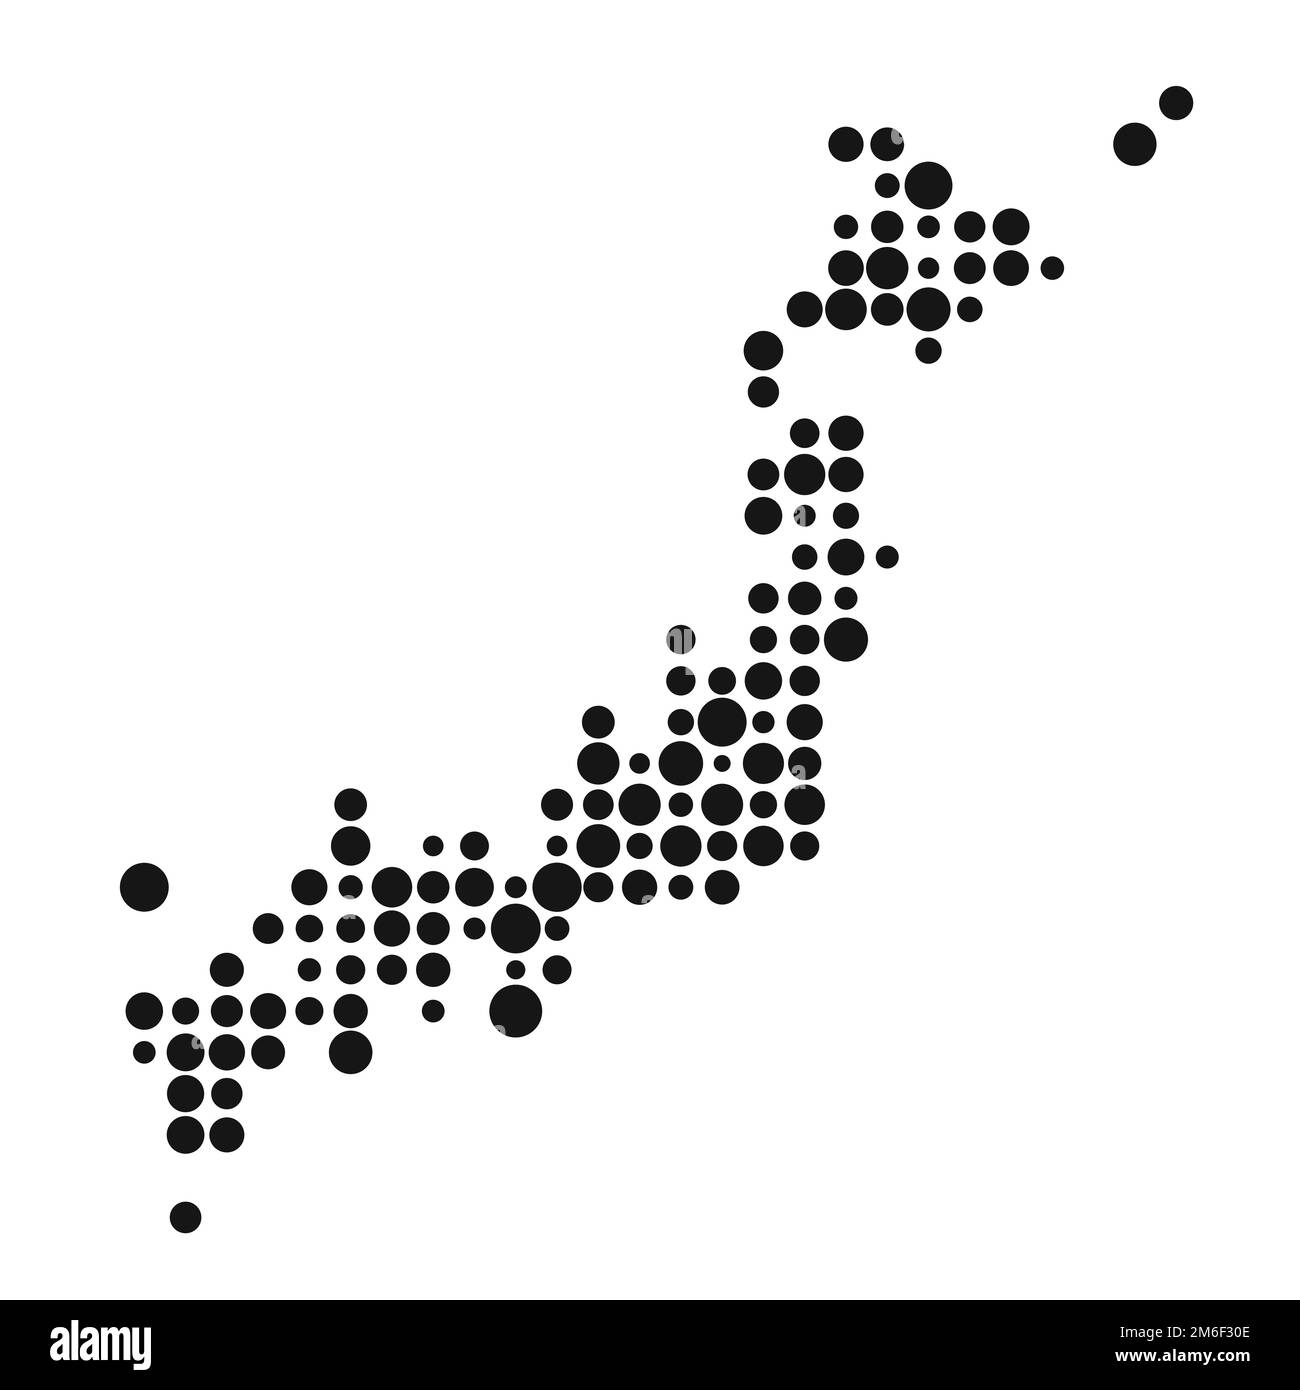 Verpixelte Darstellung des abgeleiteten Musters der japanischen Kartensilhouette Stock Vektor